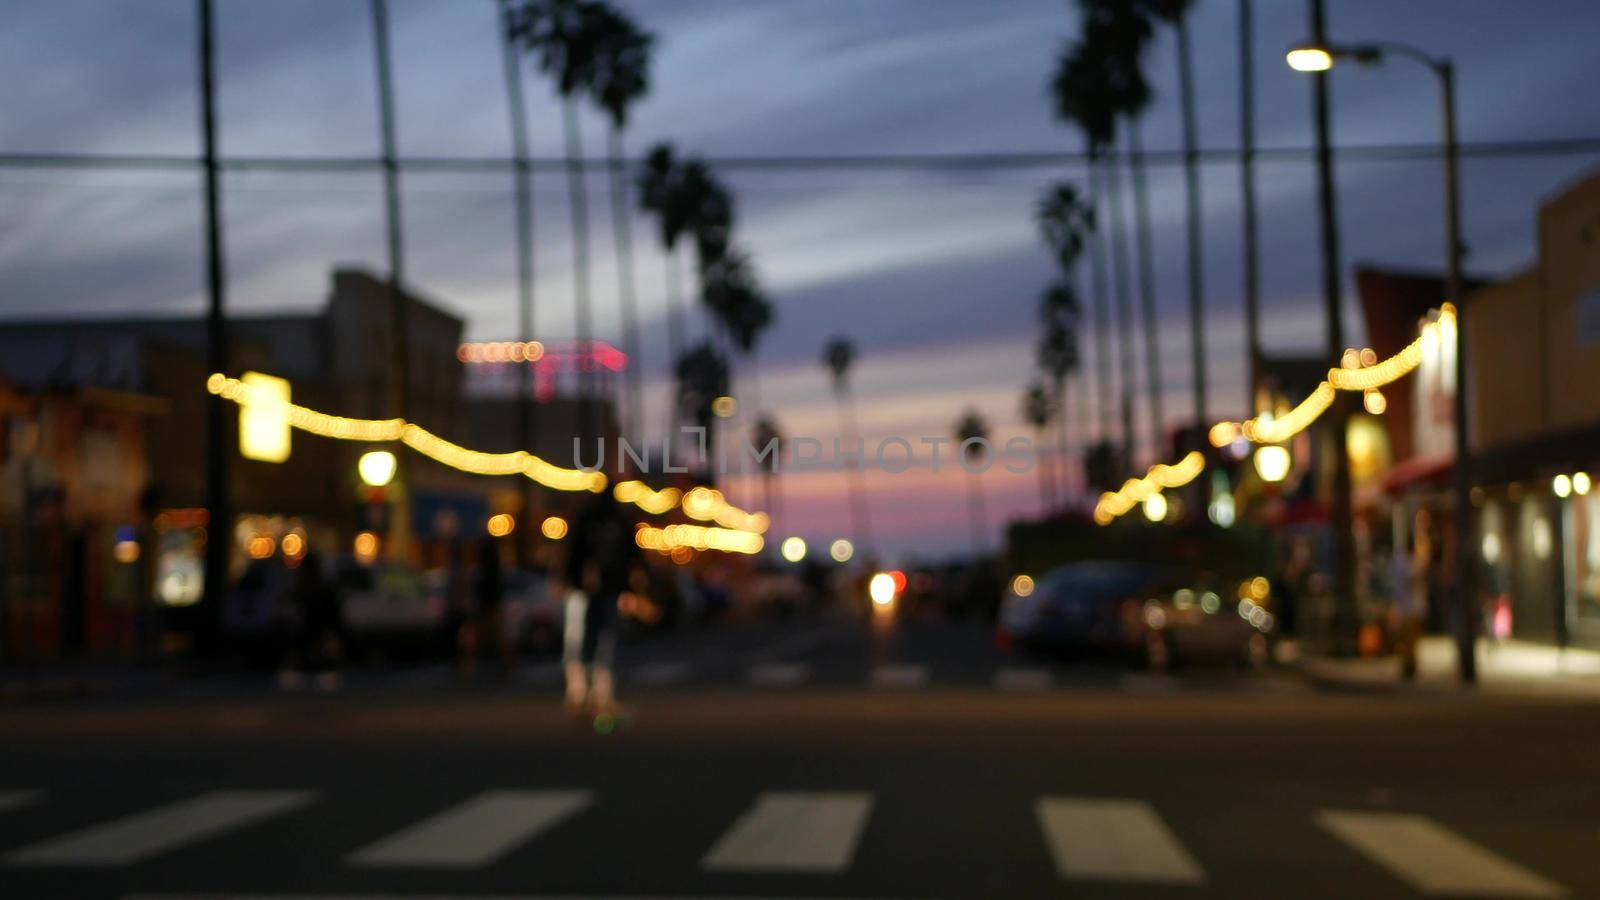 Palm trees in Ocean Beach, lights in twilight, California coast, San Diego, USA. by DogoraSun